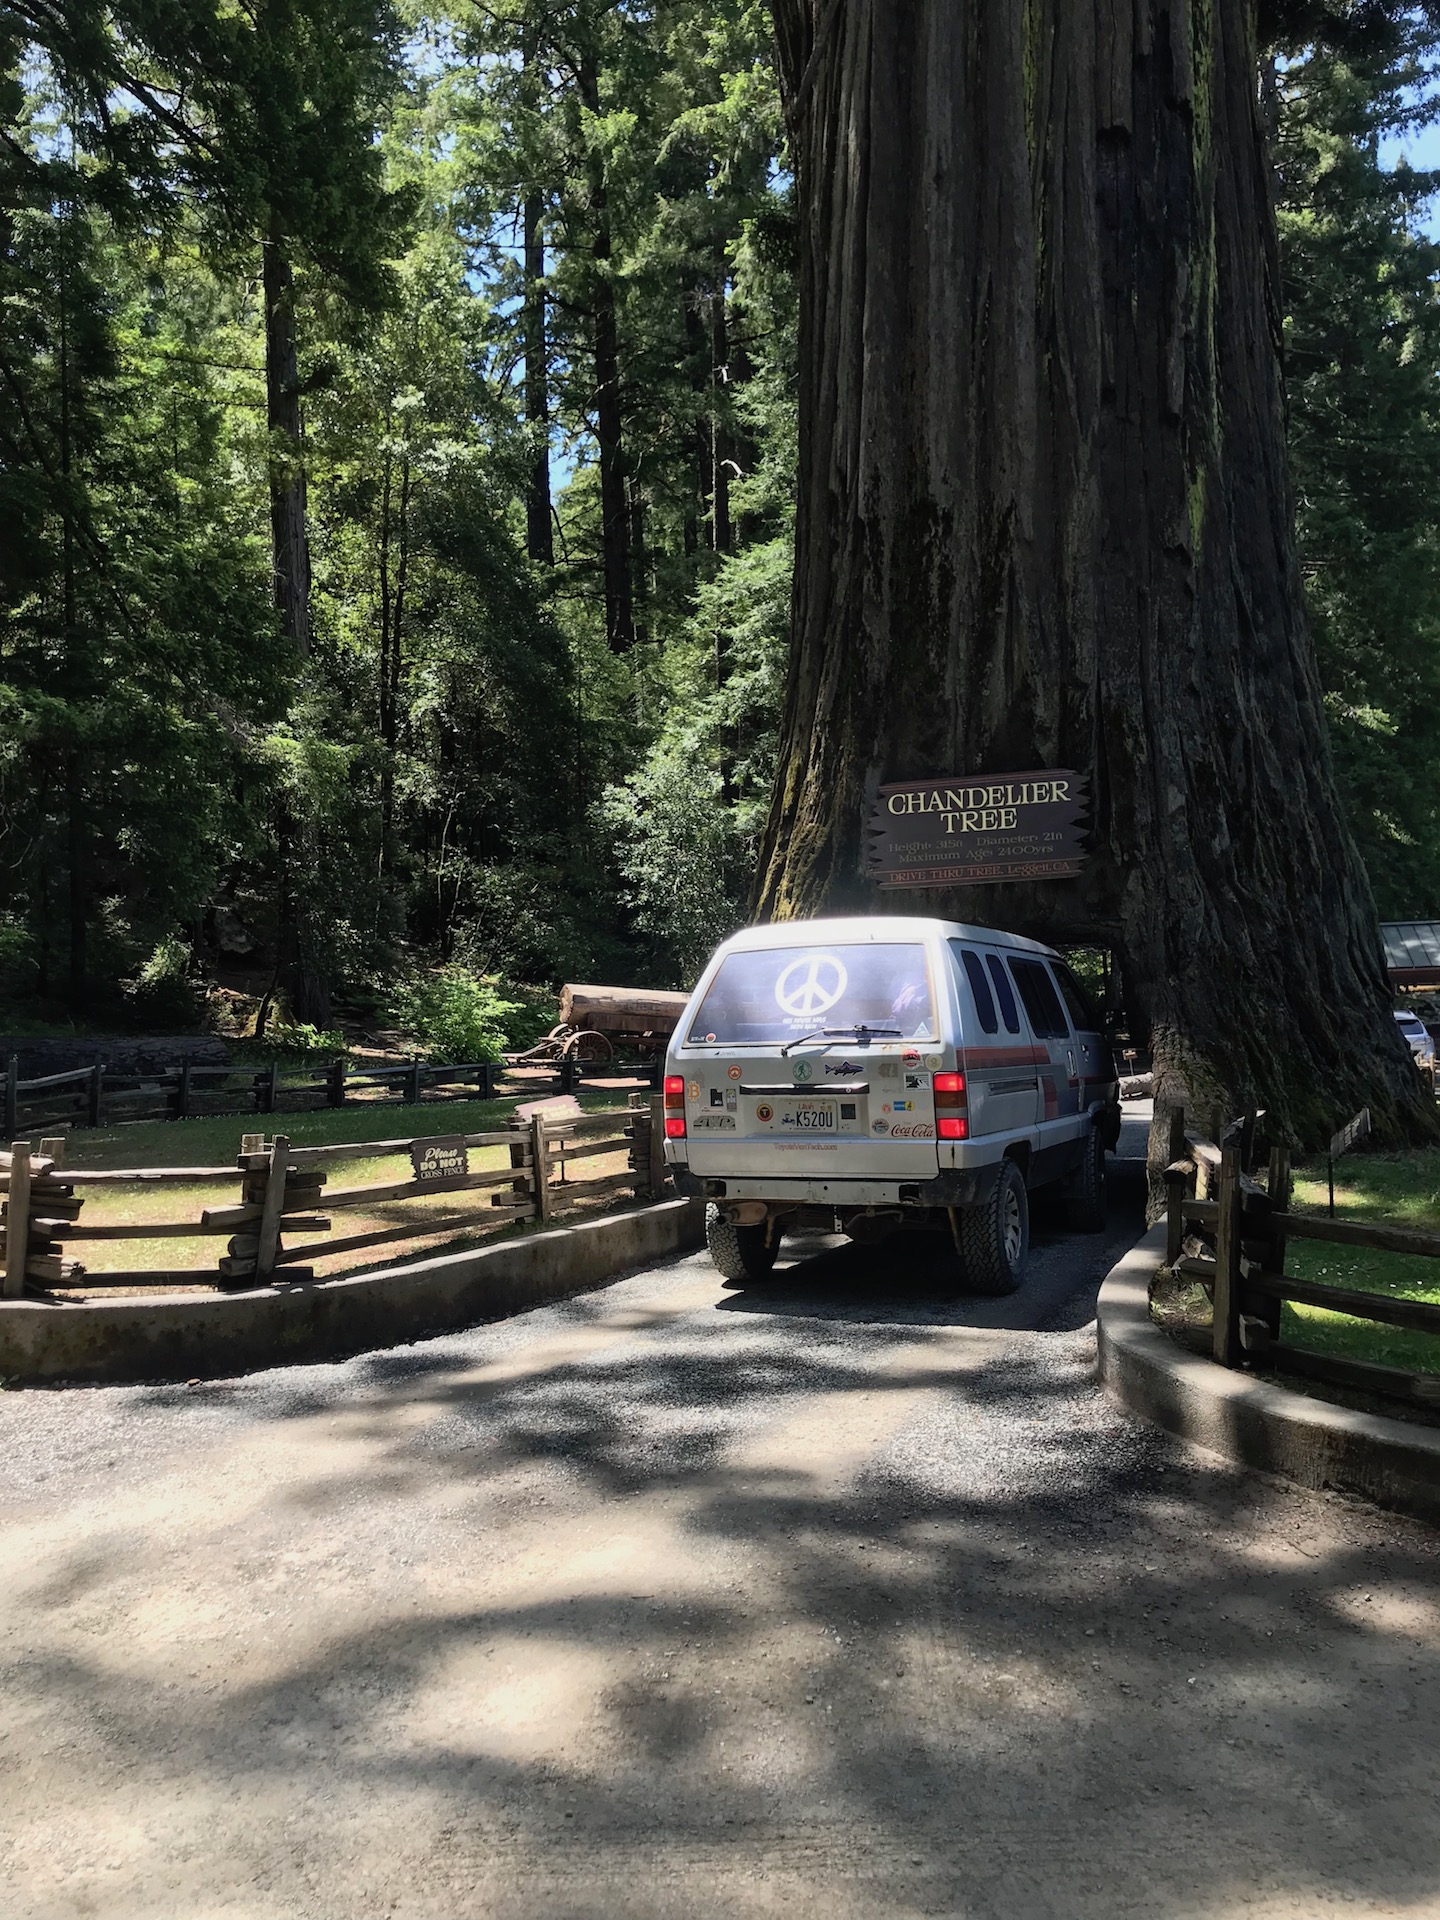 The leggett drive thru redwood tree